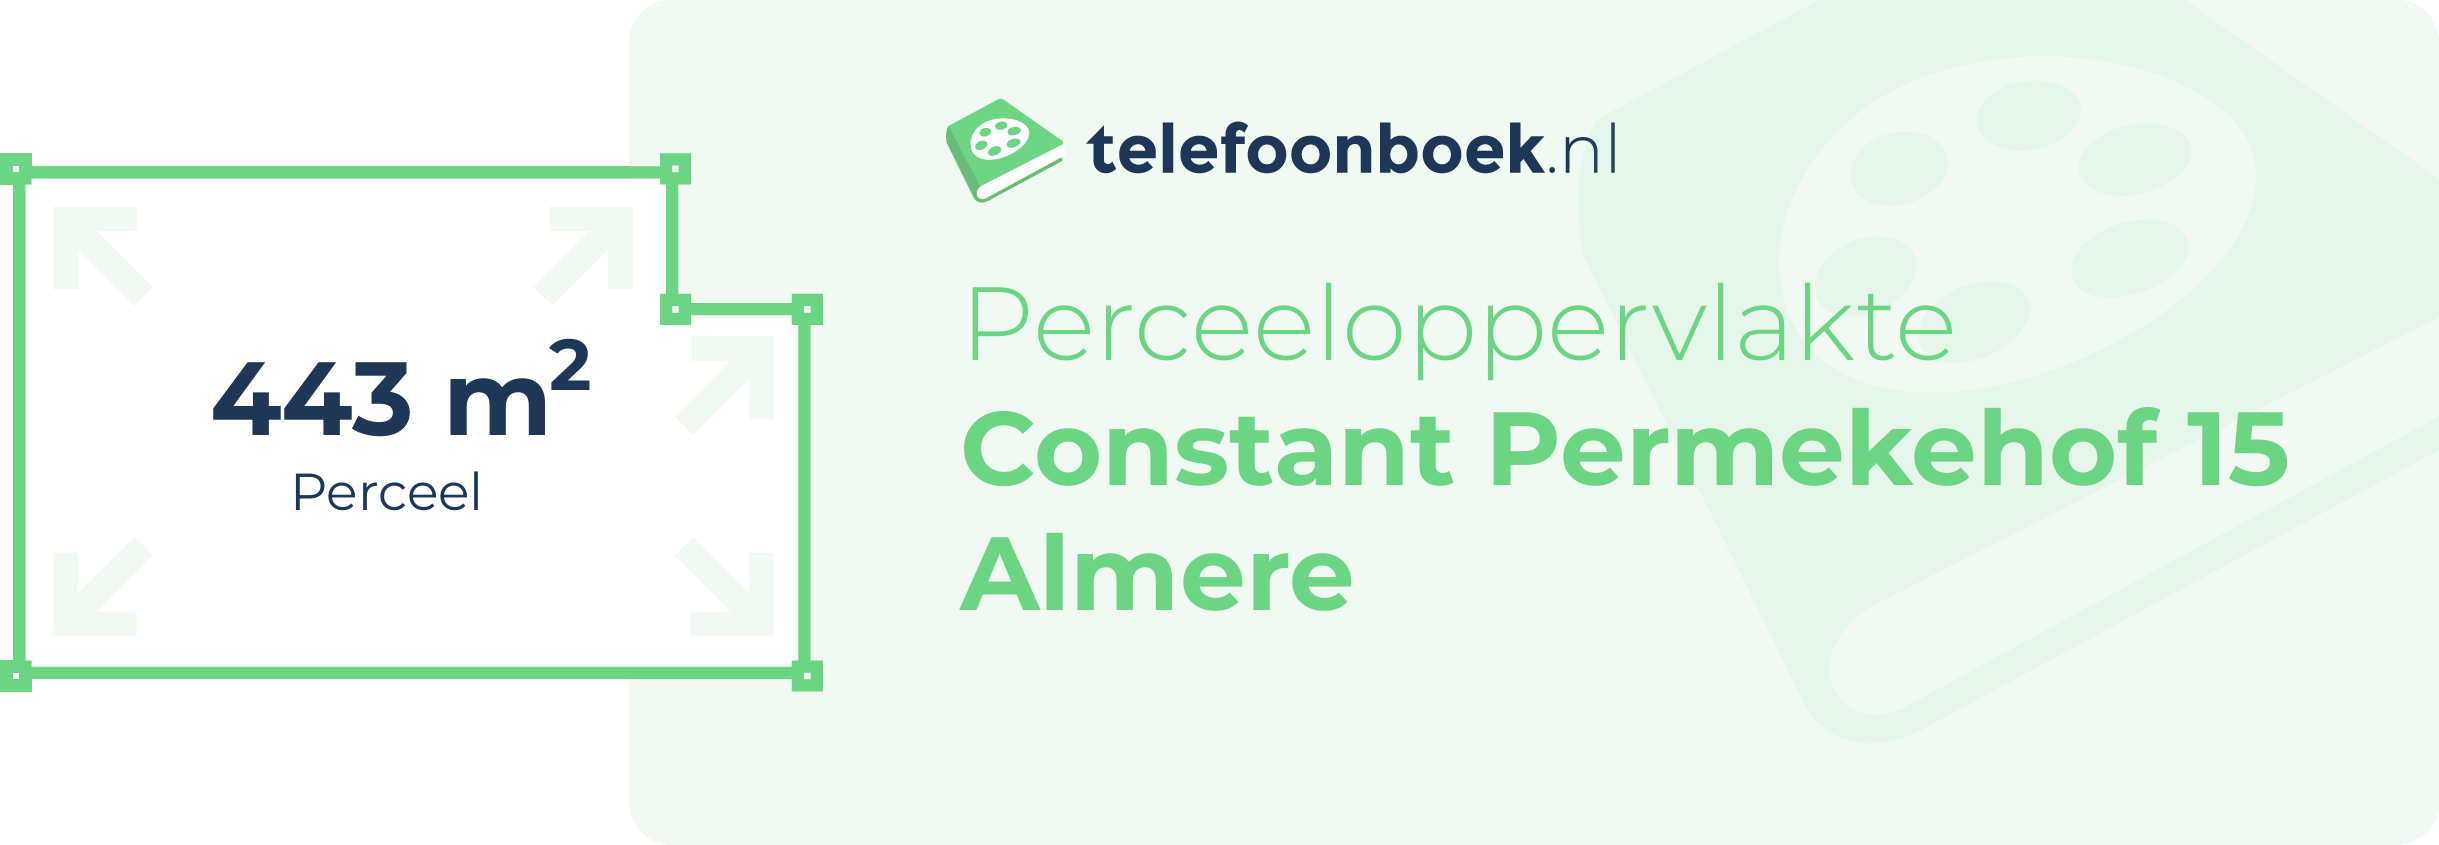 Perceeloppervlakte Constant Permekehof 15 Almere